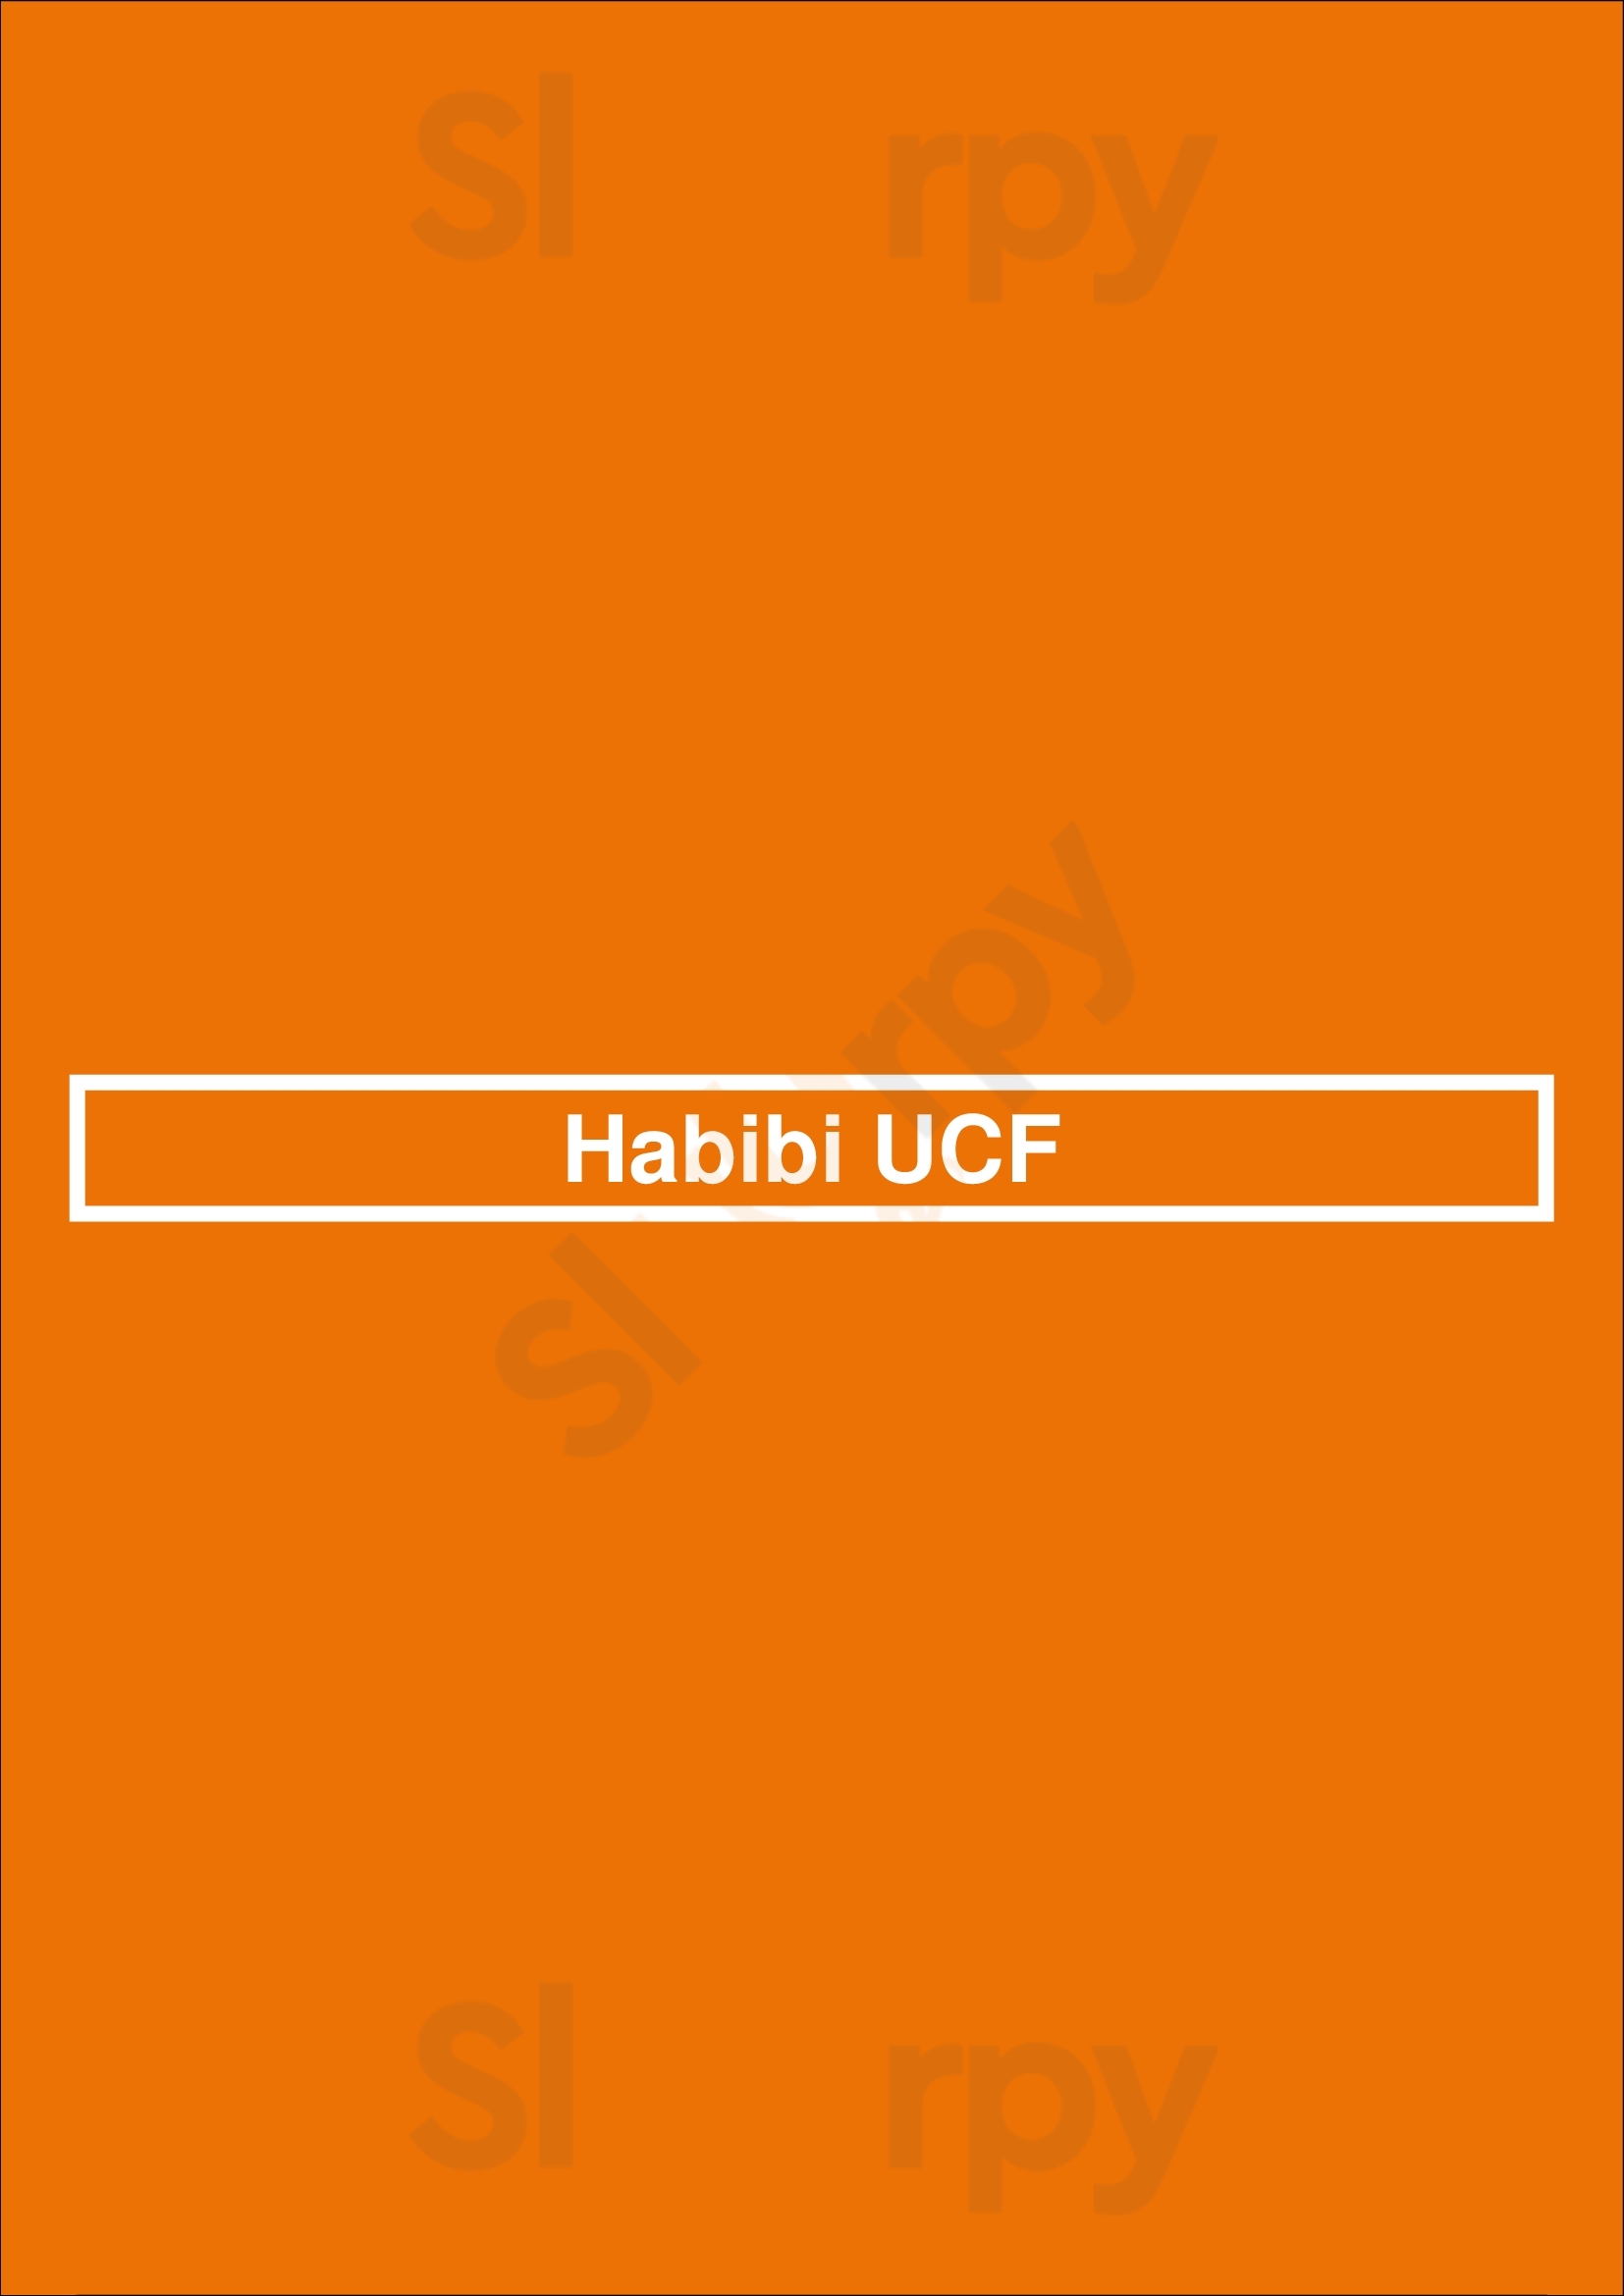 Habibi Ucf Orlando Menu - 1